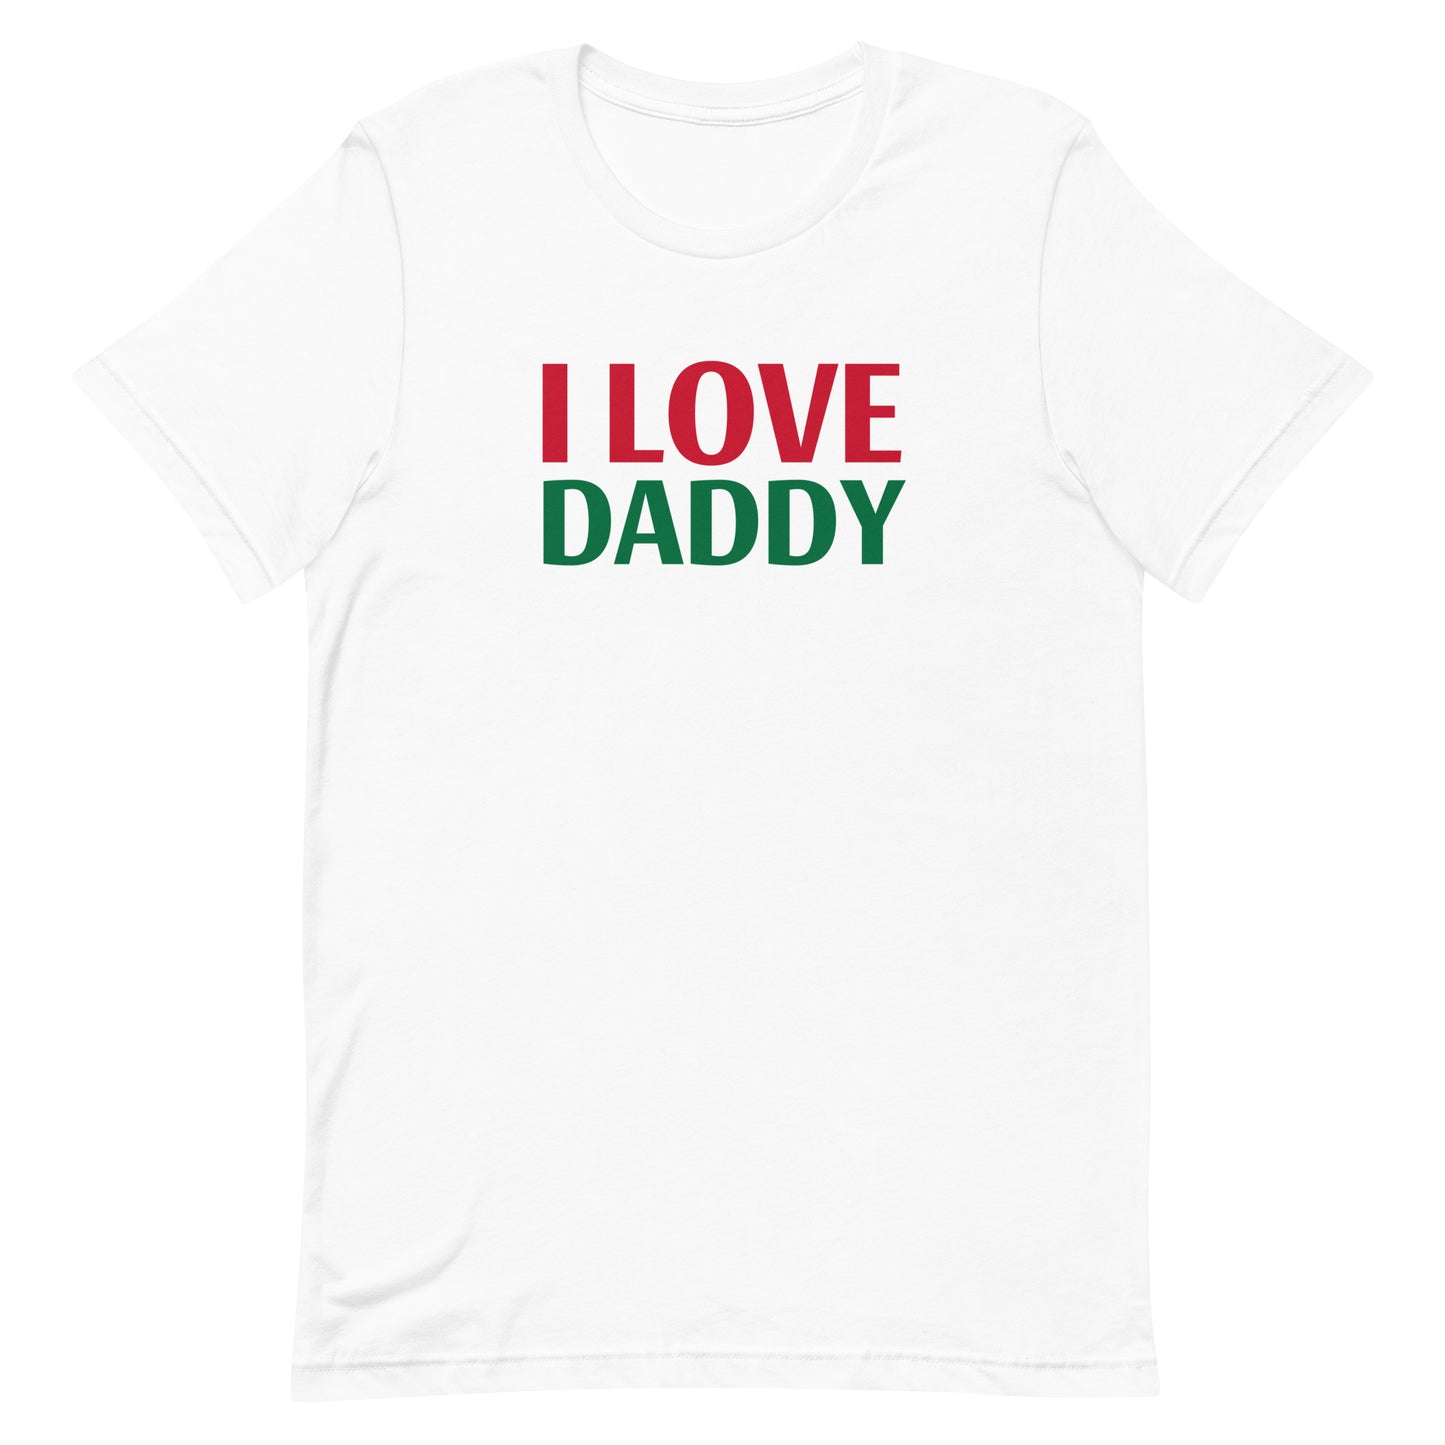 I LOVE DADDY Unisex t-shirt